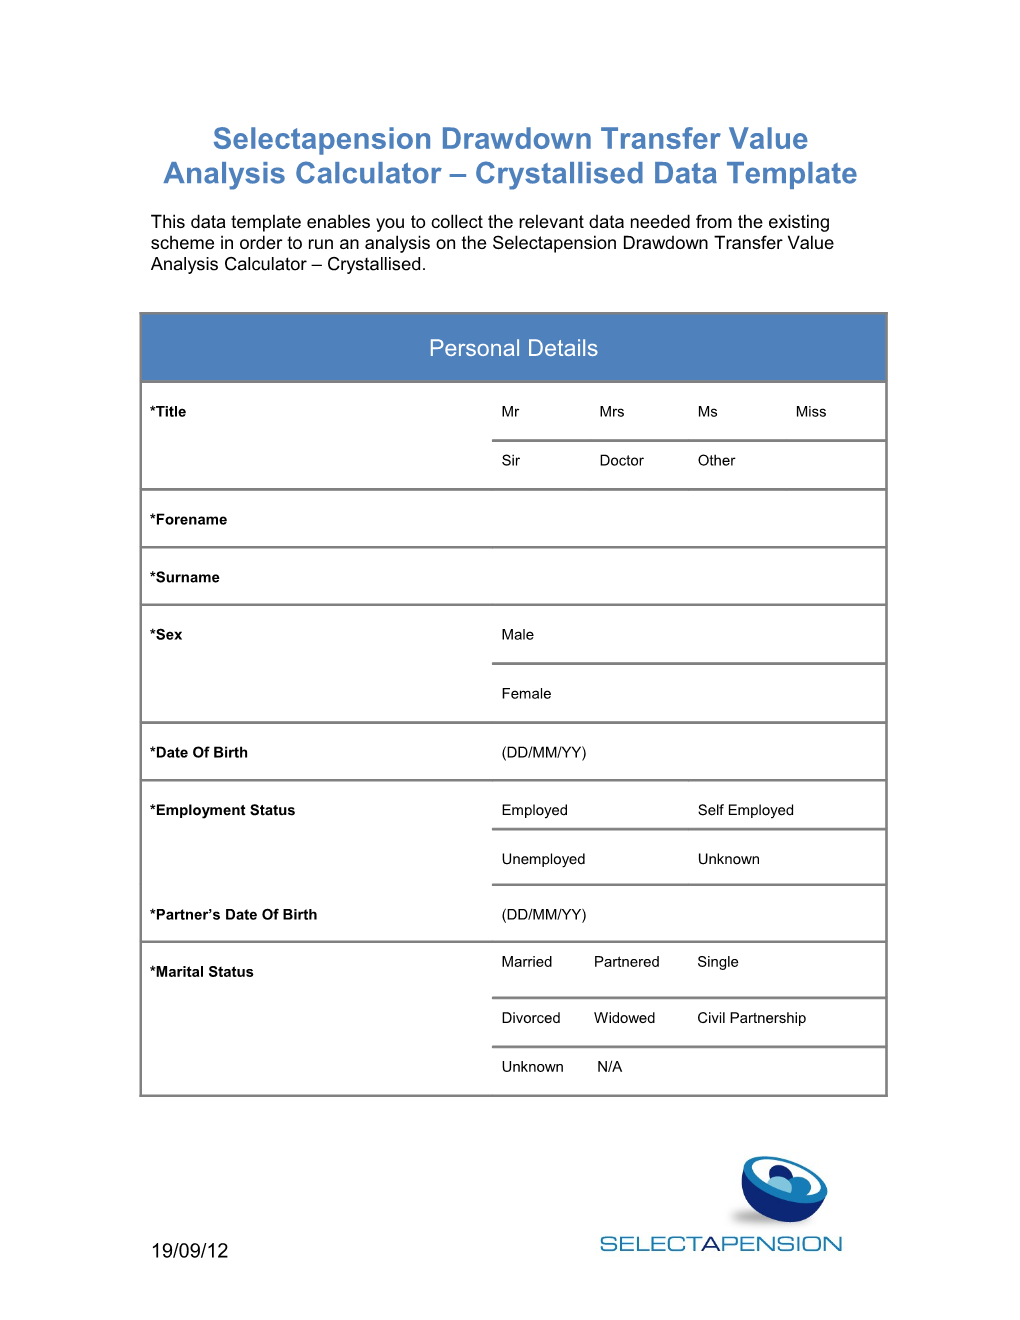 Selectapension Drawdown Transfer Value Analysis Calculator Crystallised Data Template